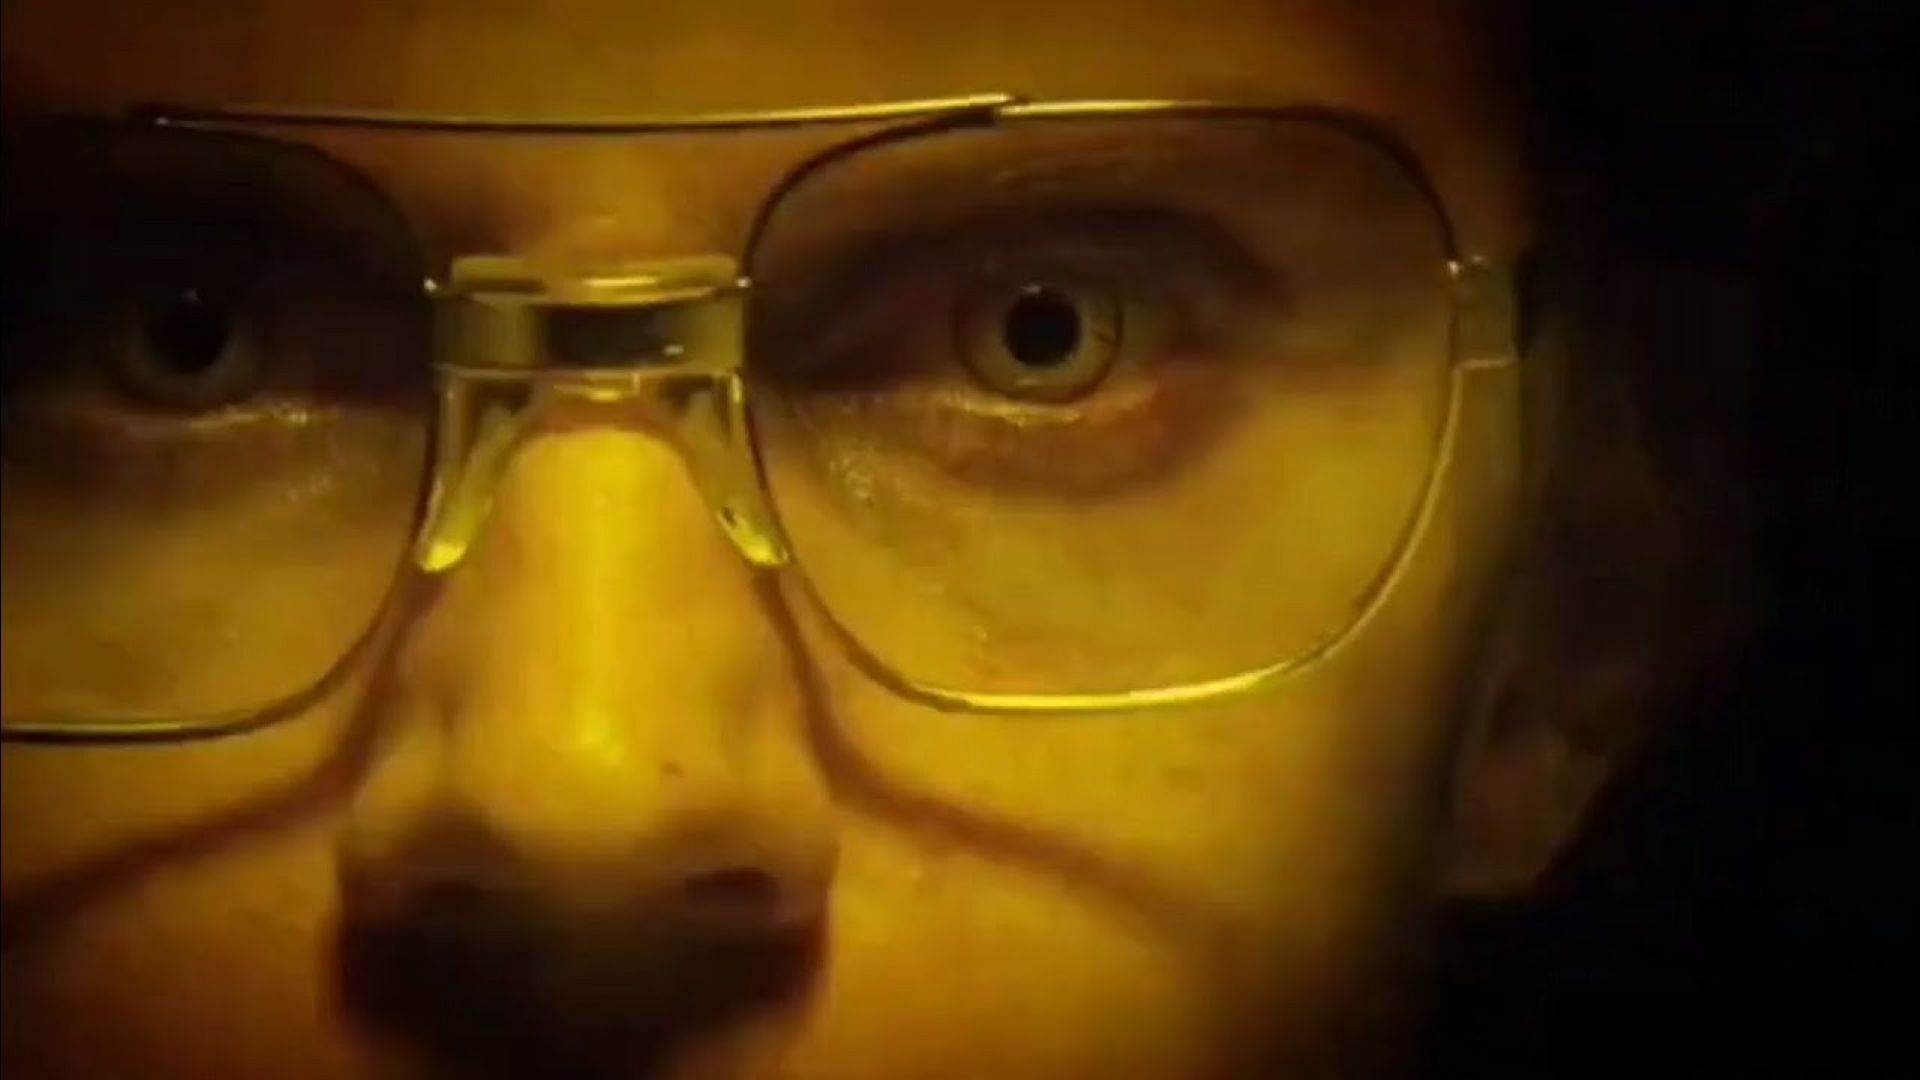 A still from Monster: The Jeffrey Dahmer Story (Image via Netflix)